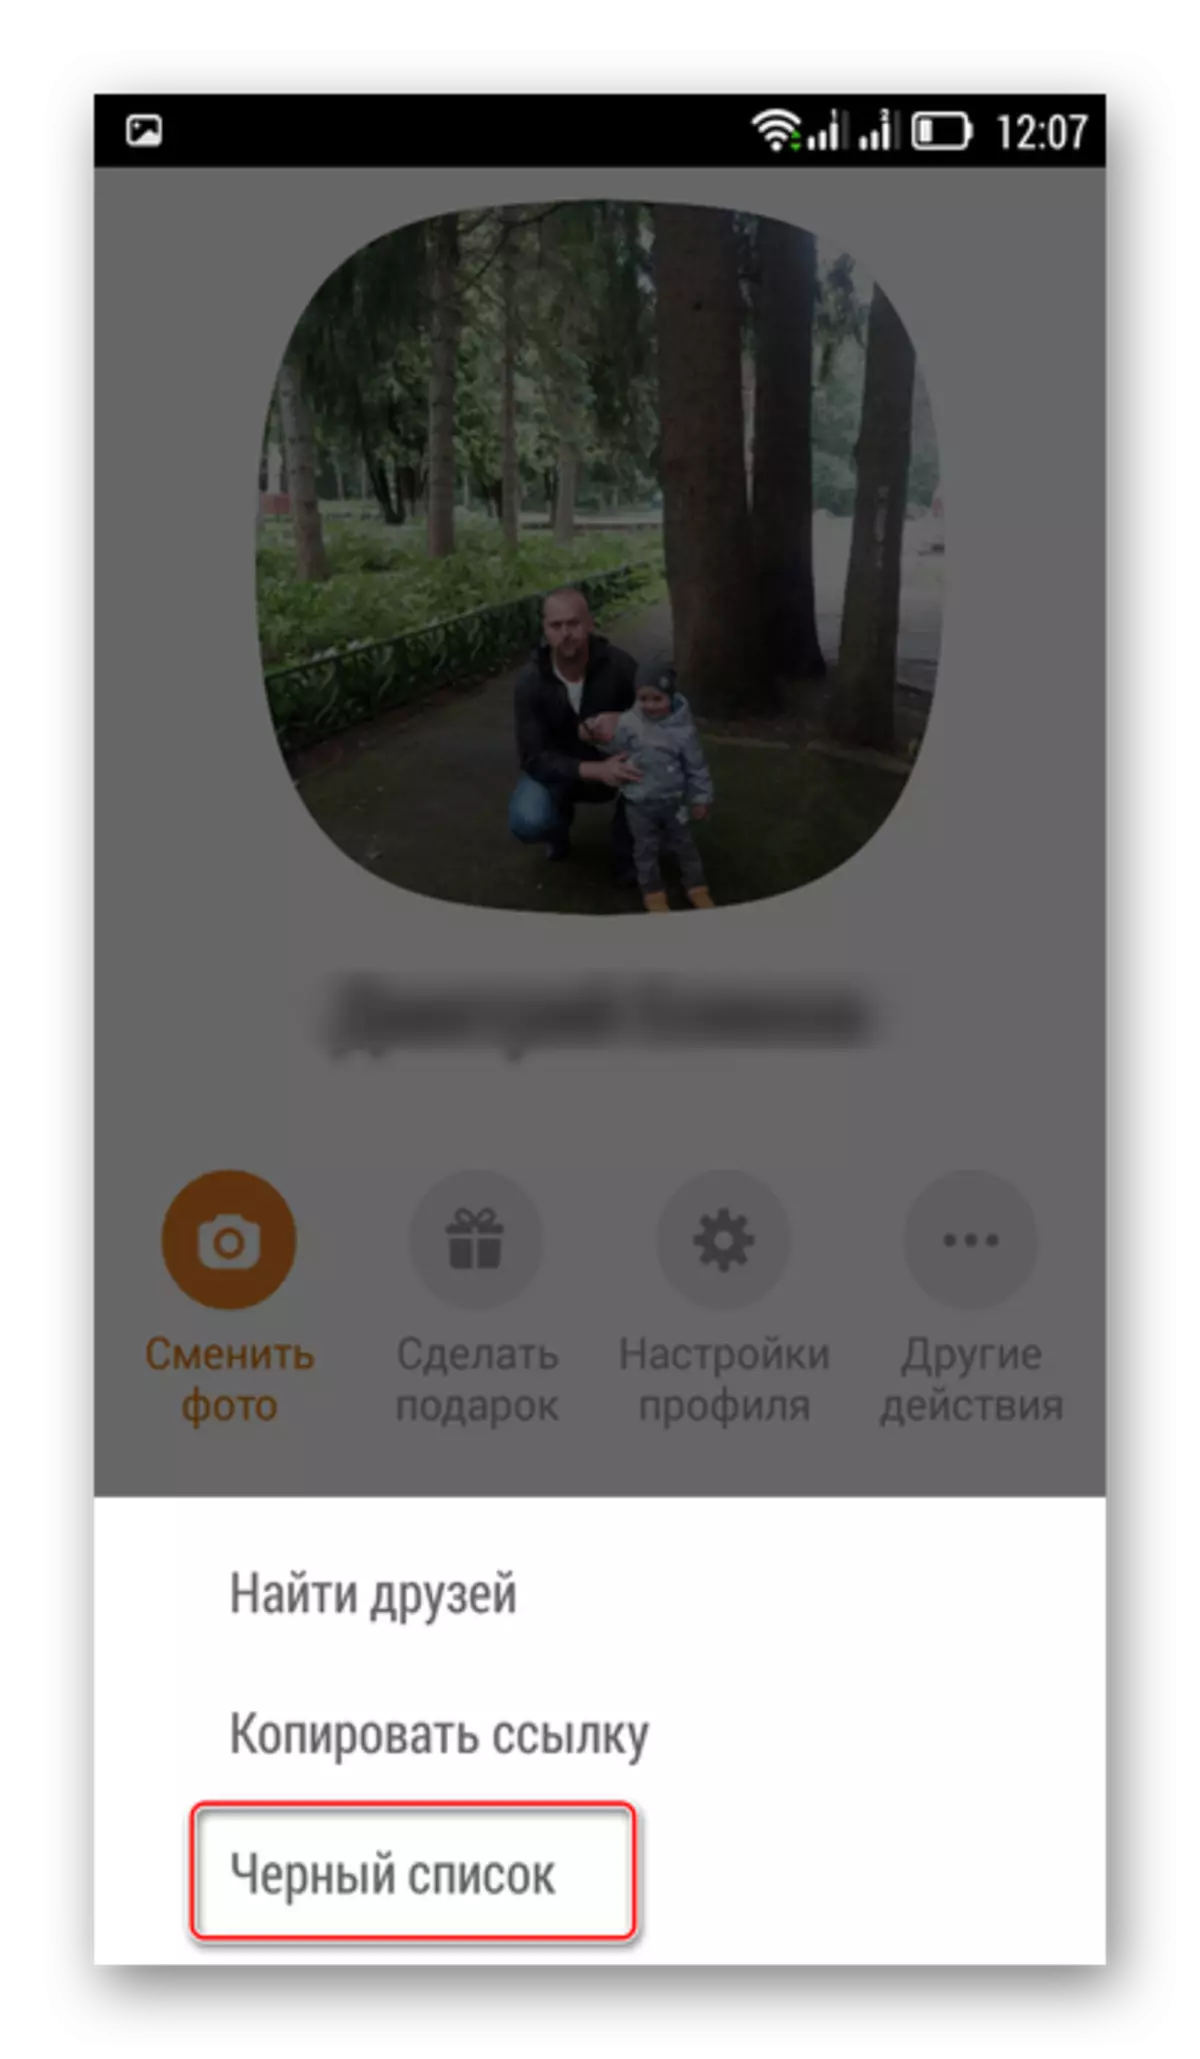 Submenu tindakan lain dalam aplikasi mudah alih odnoklassniki